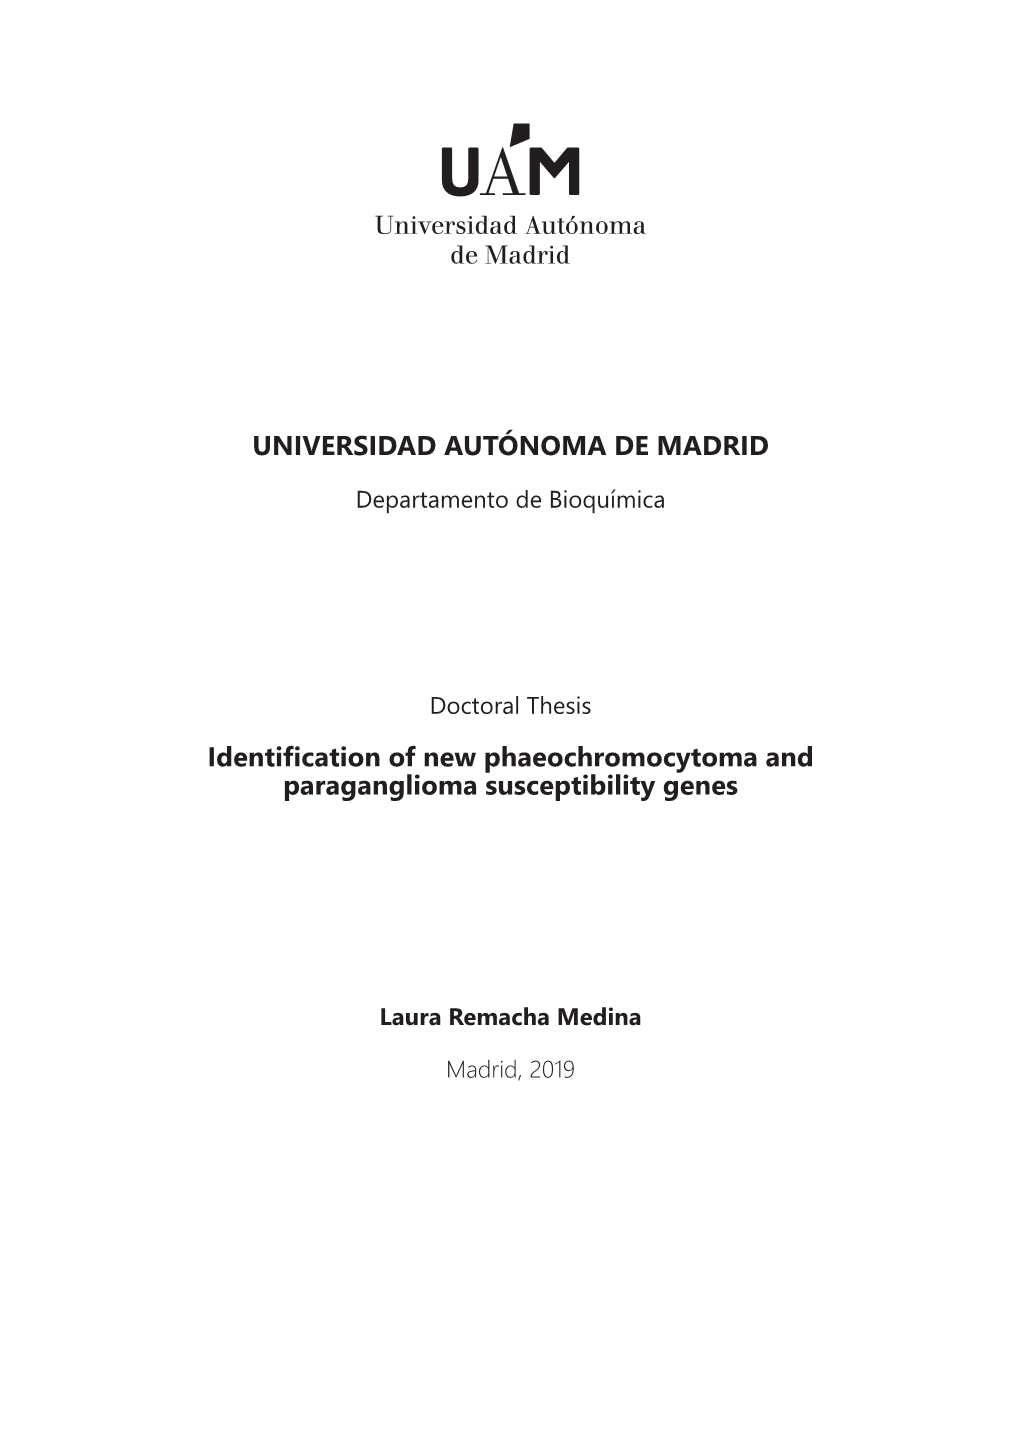 UNIVERSIDAD AUTÓNOMA DE MADRID Identification of New